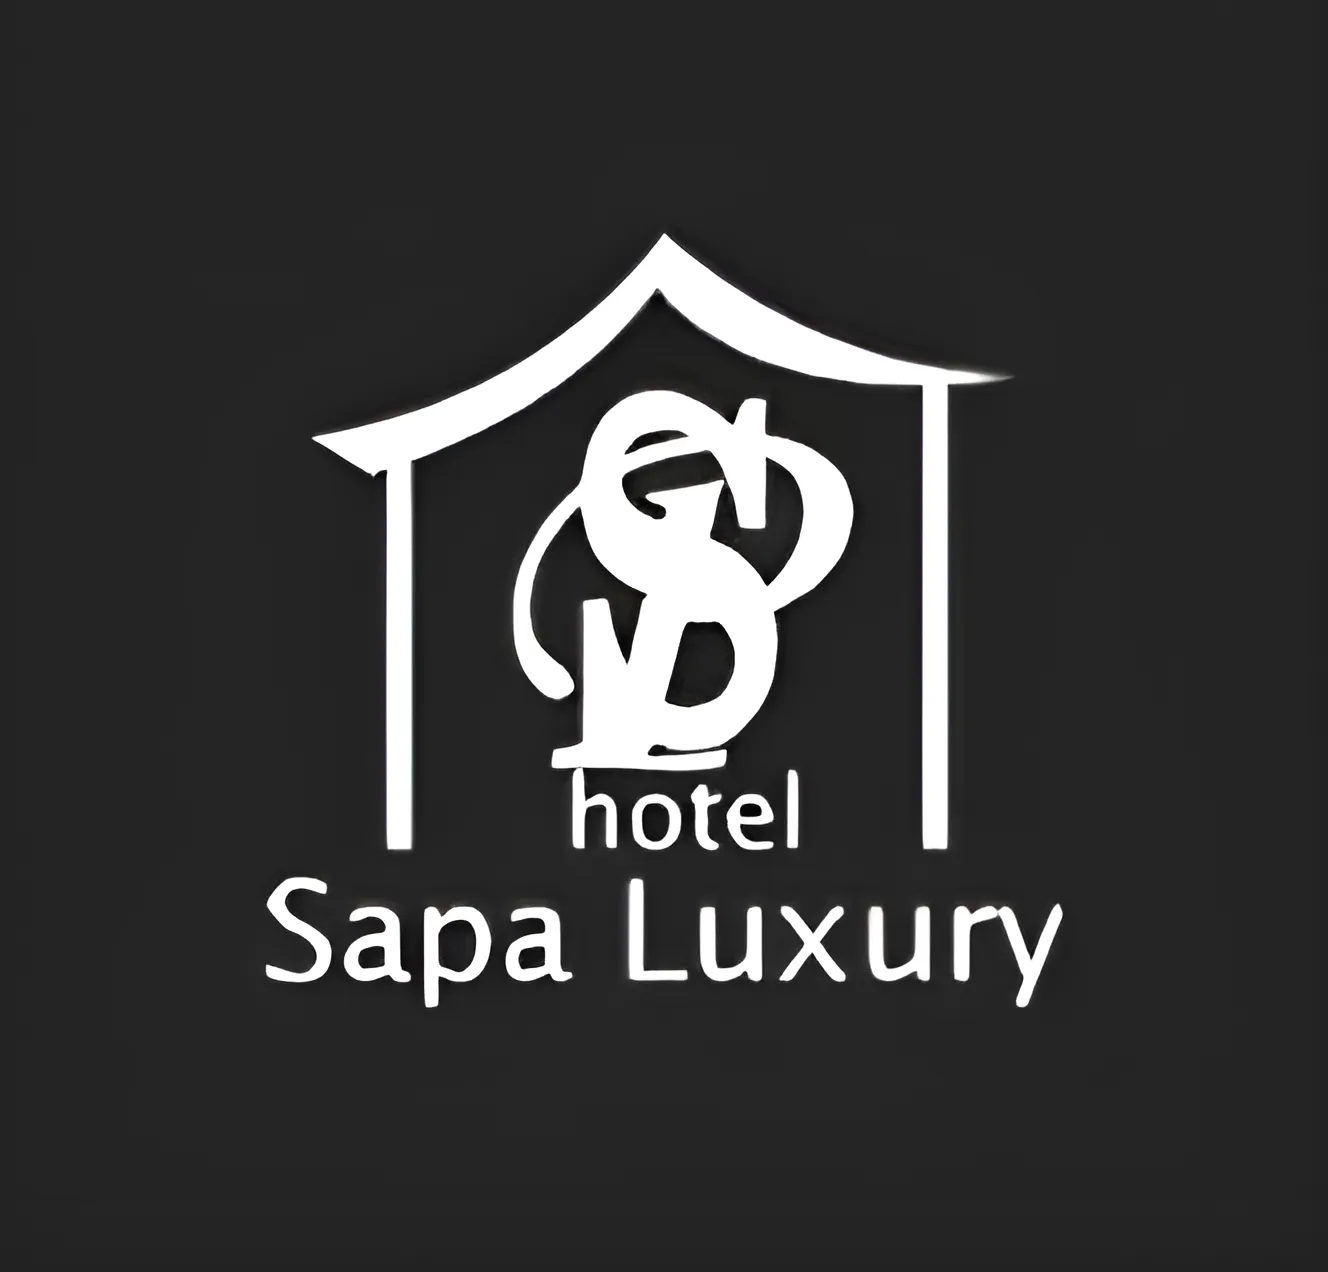 SAPA LUXURY HOTEL & SPA